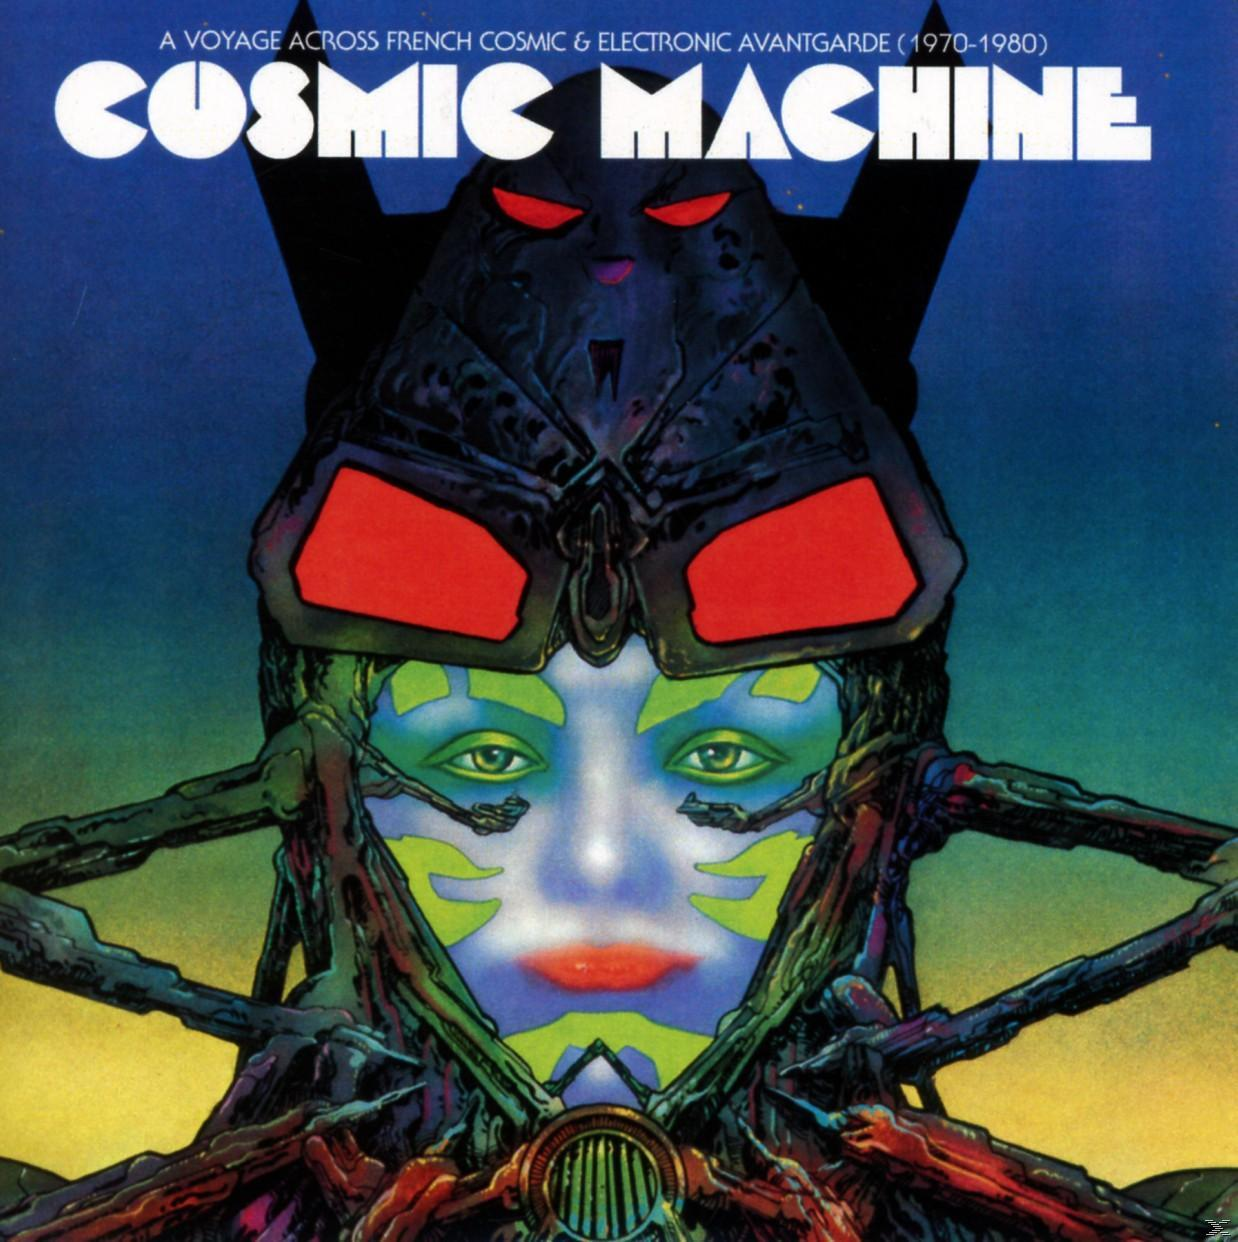 VARIOUS - Cosmic Machine - (CD) a Voyage